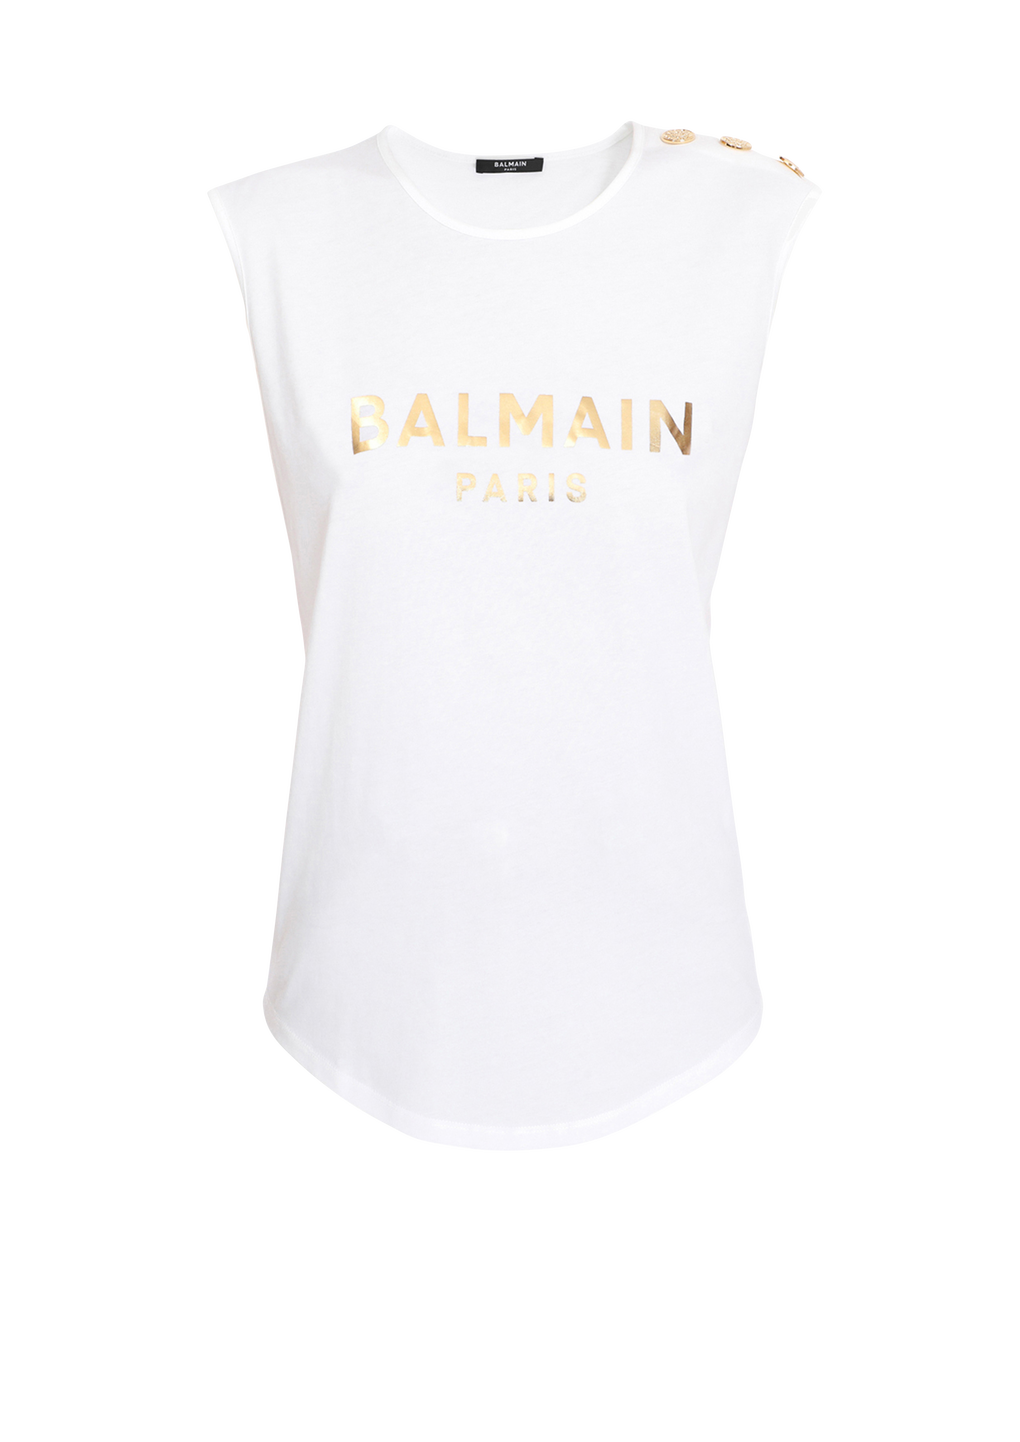 T-shirt in cotone con logo Balmain, bianco, hi-res